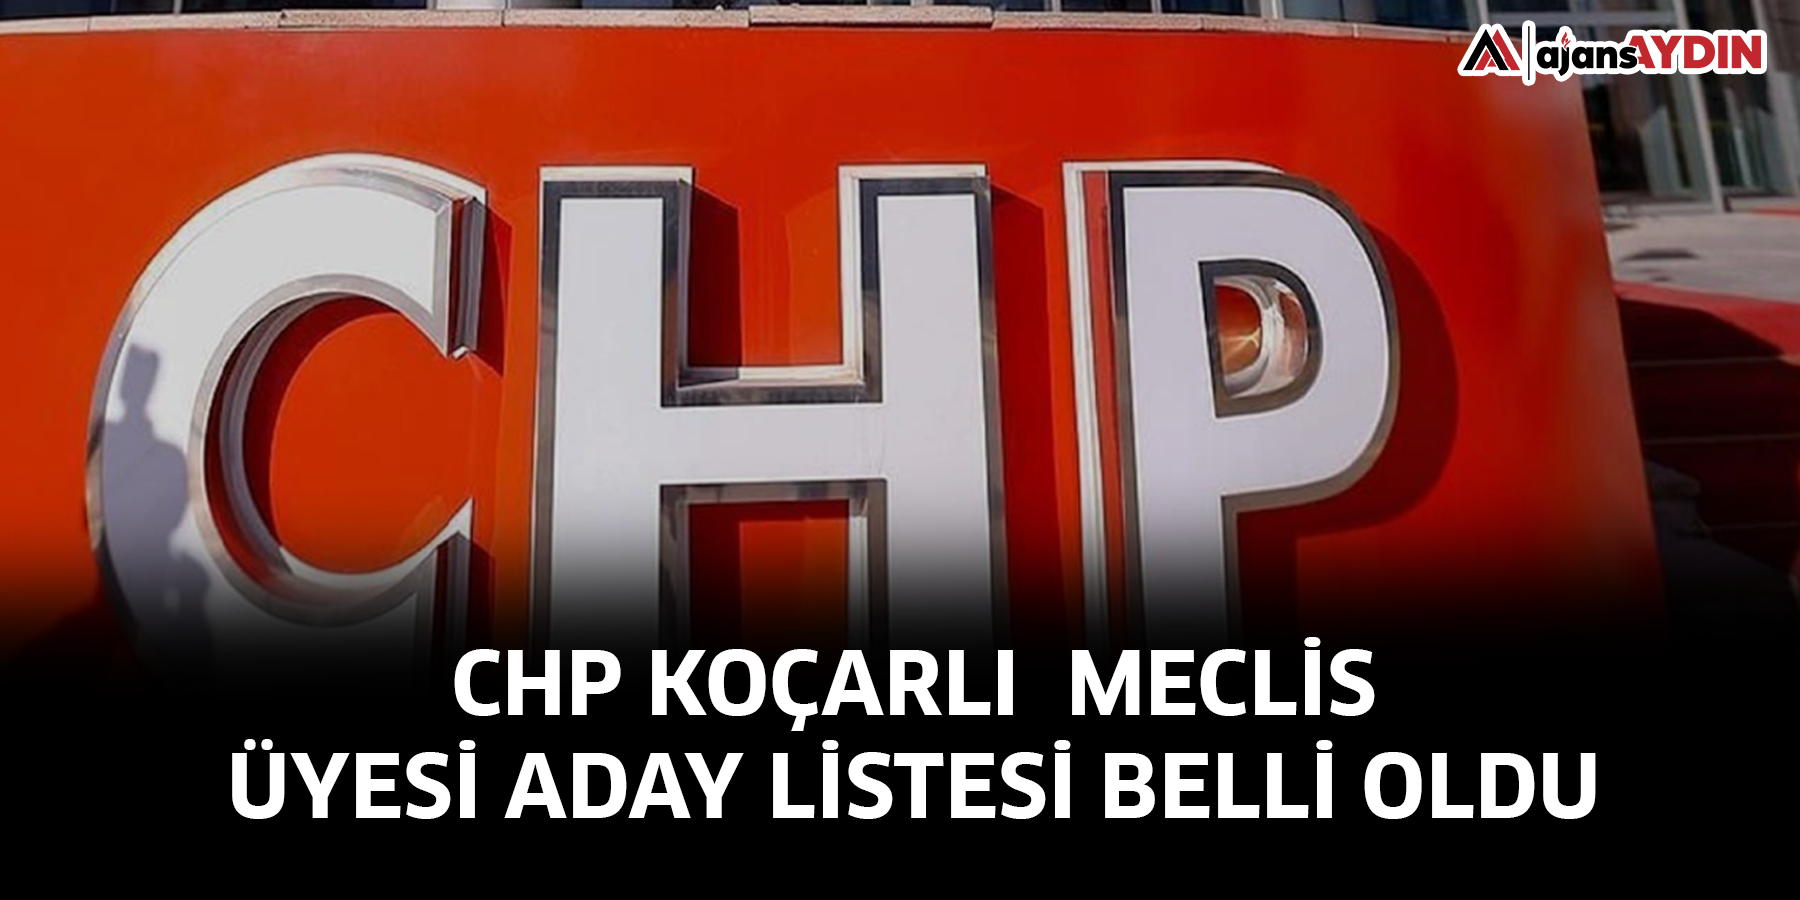 CHP Koçarlı Meclis Üyesi aday listesi belli oldu